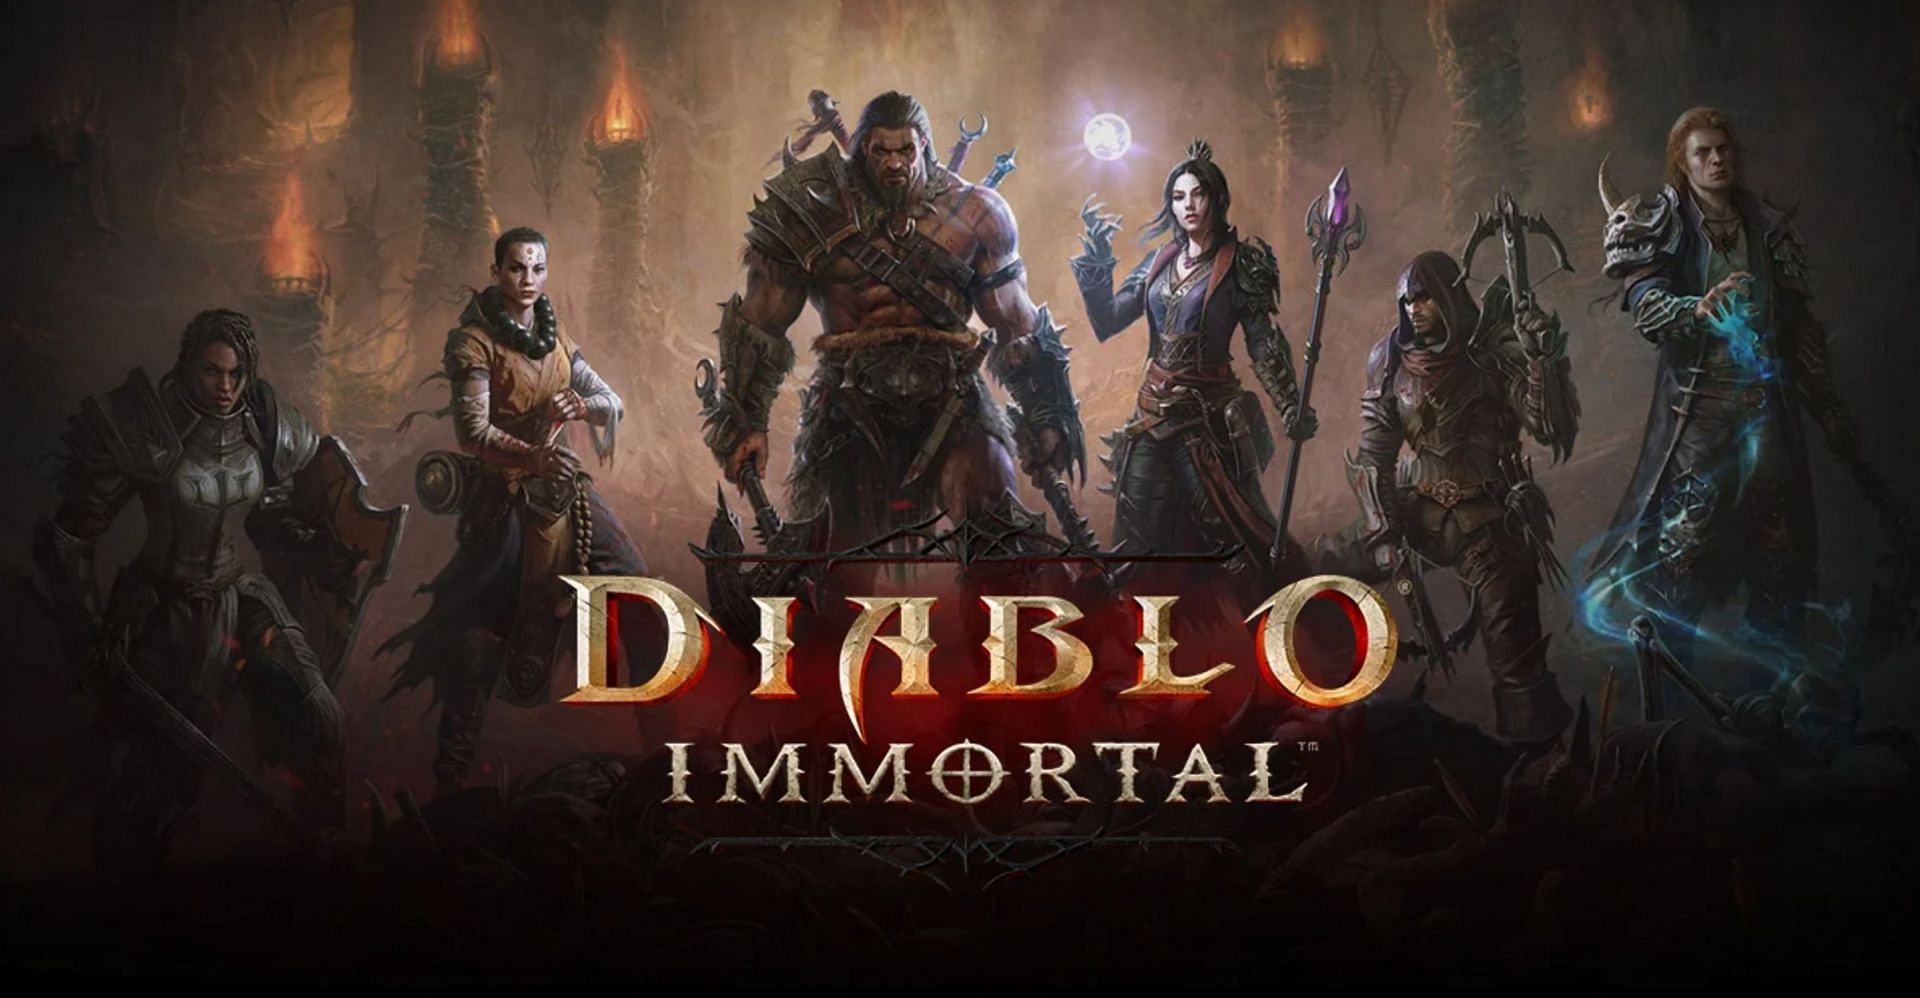 The character classes of Diablo Immortal (Image via Activision Blizzard)